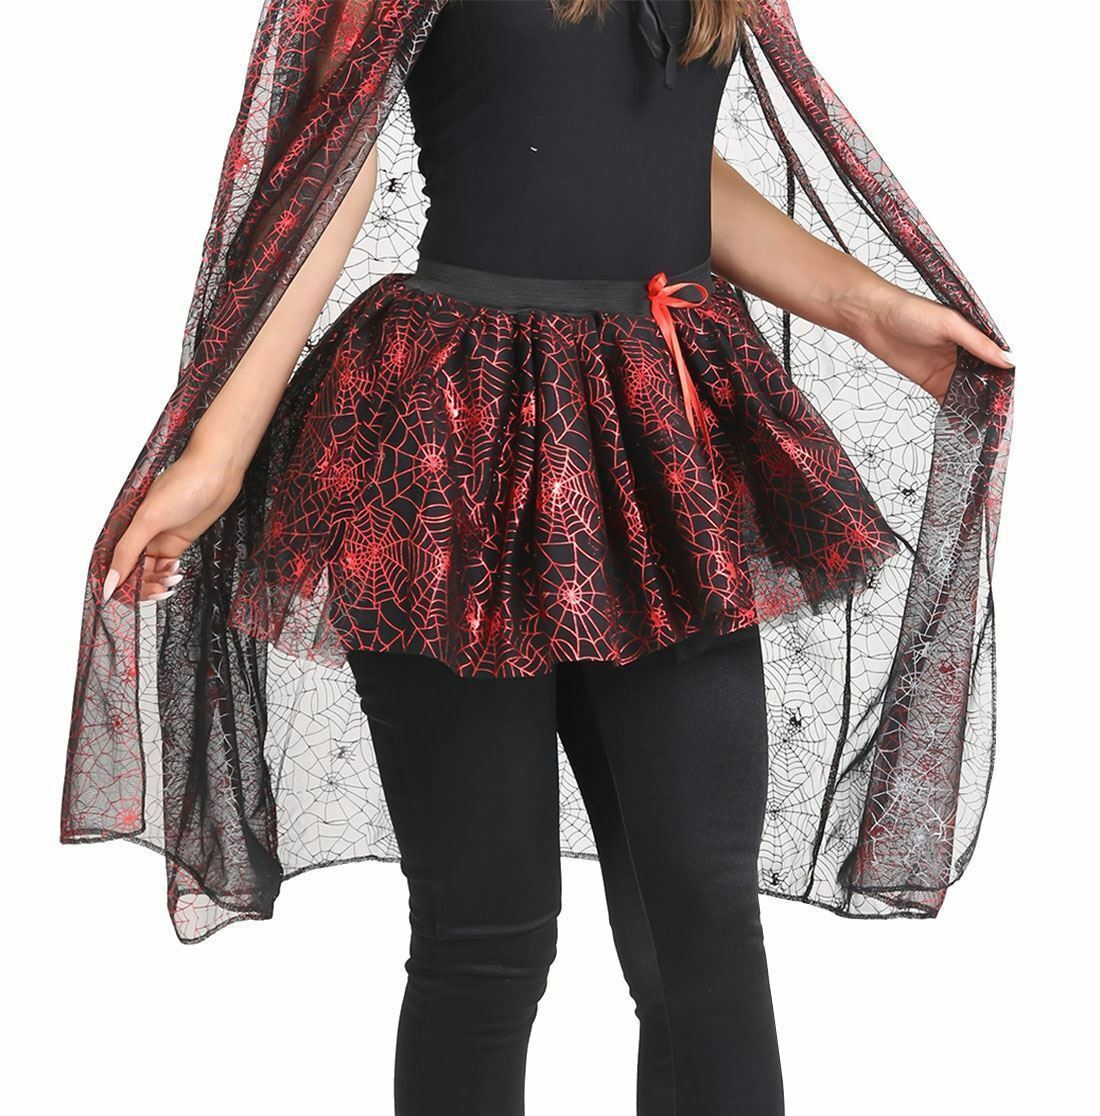 Black & Red Spider Web Layered Skirt.